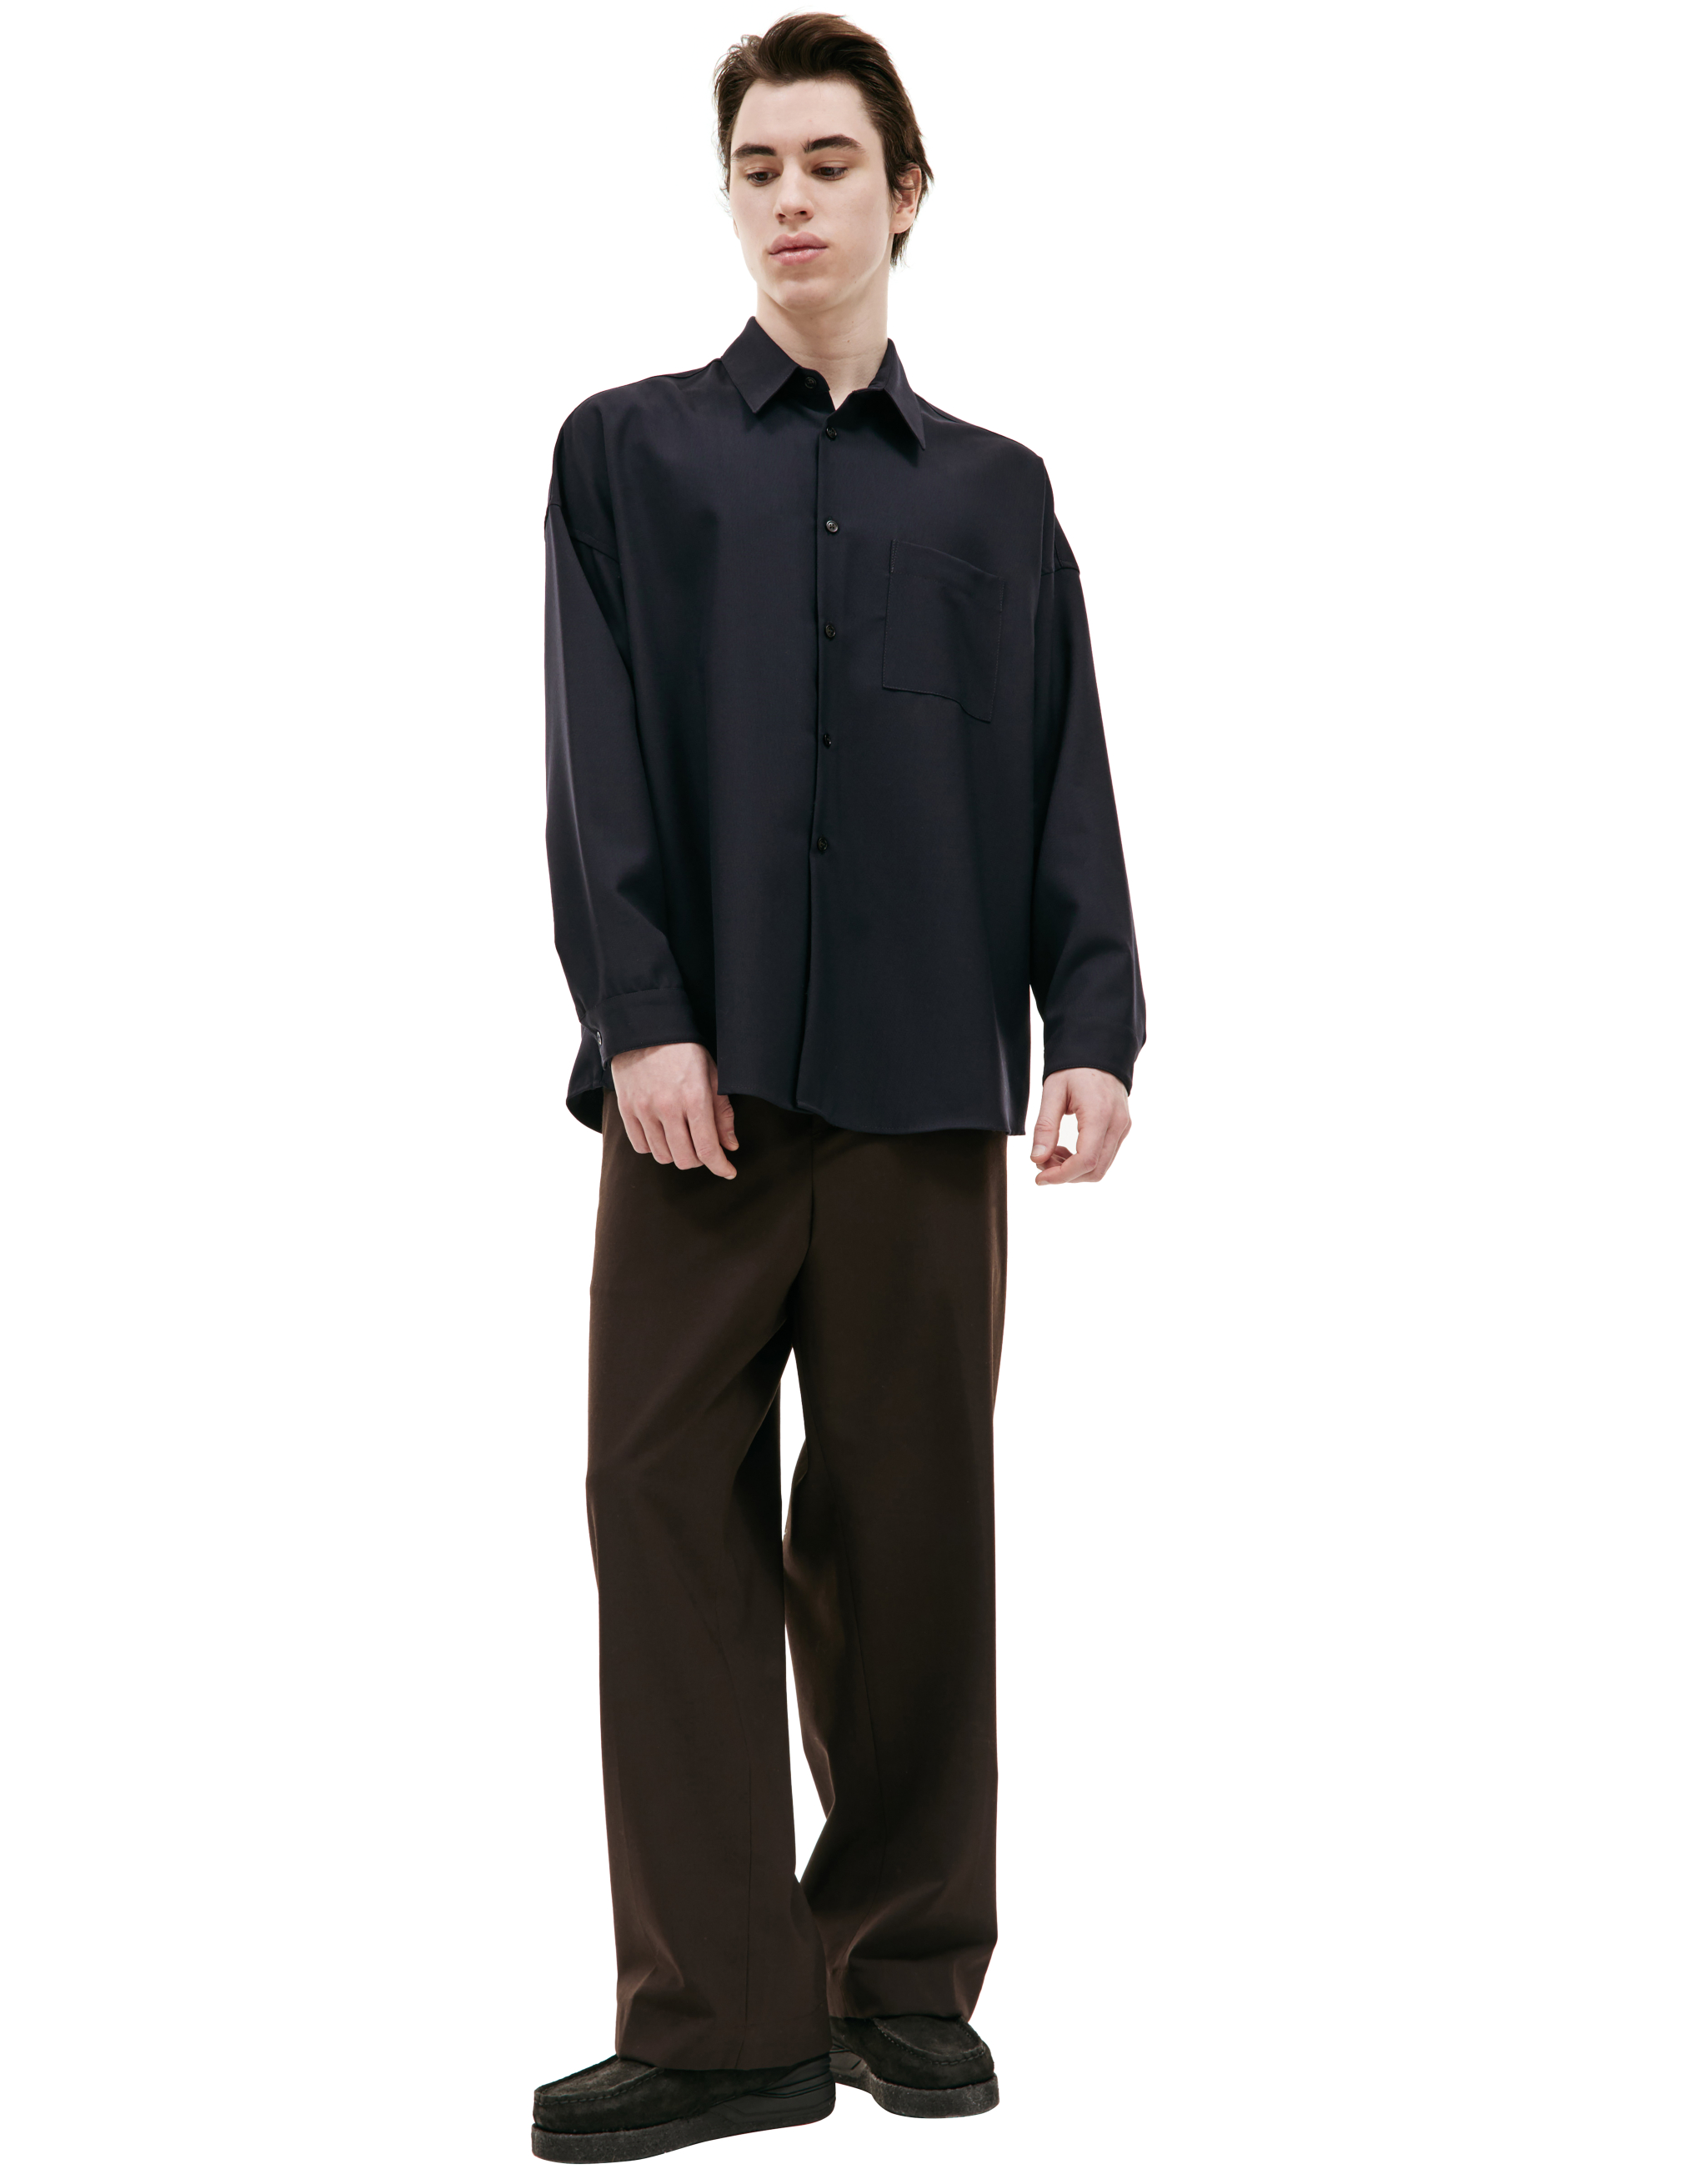 Шерстяная рубашка с накладными карманами Marni CUMU0061A3/TW839/00B99, размер 48;52